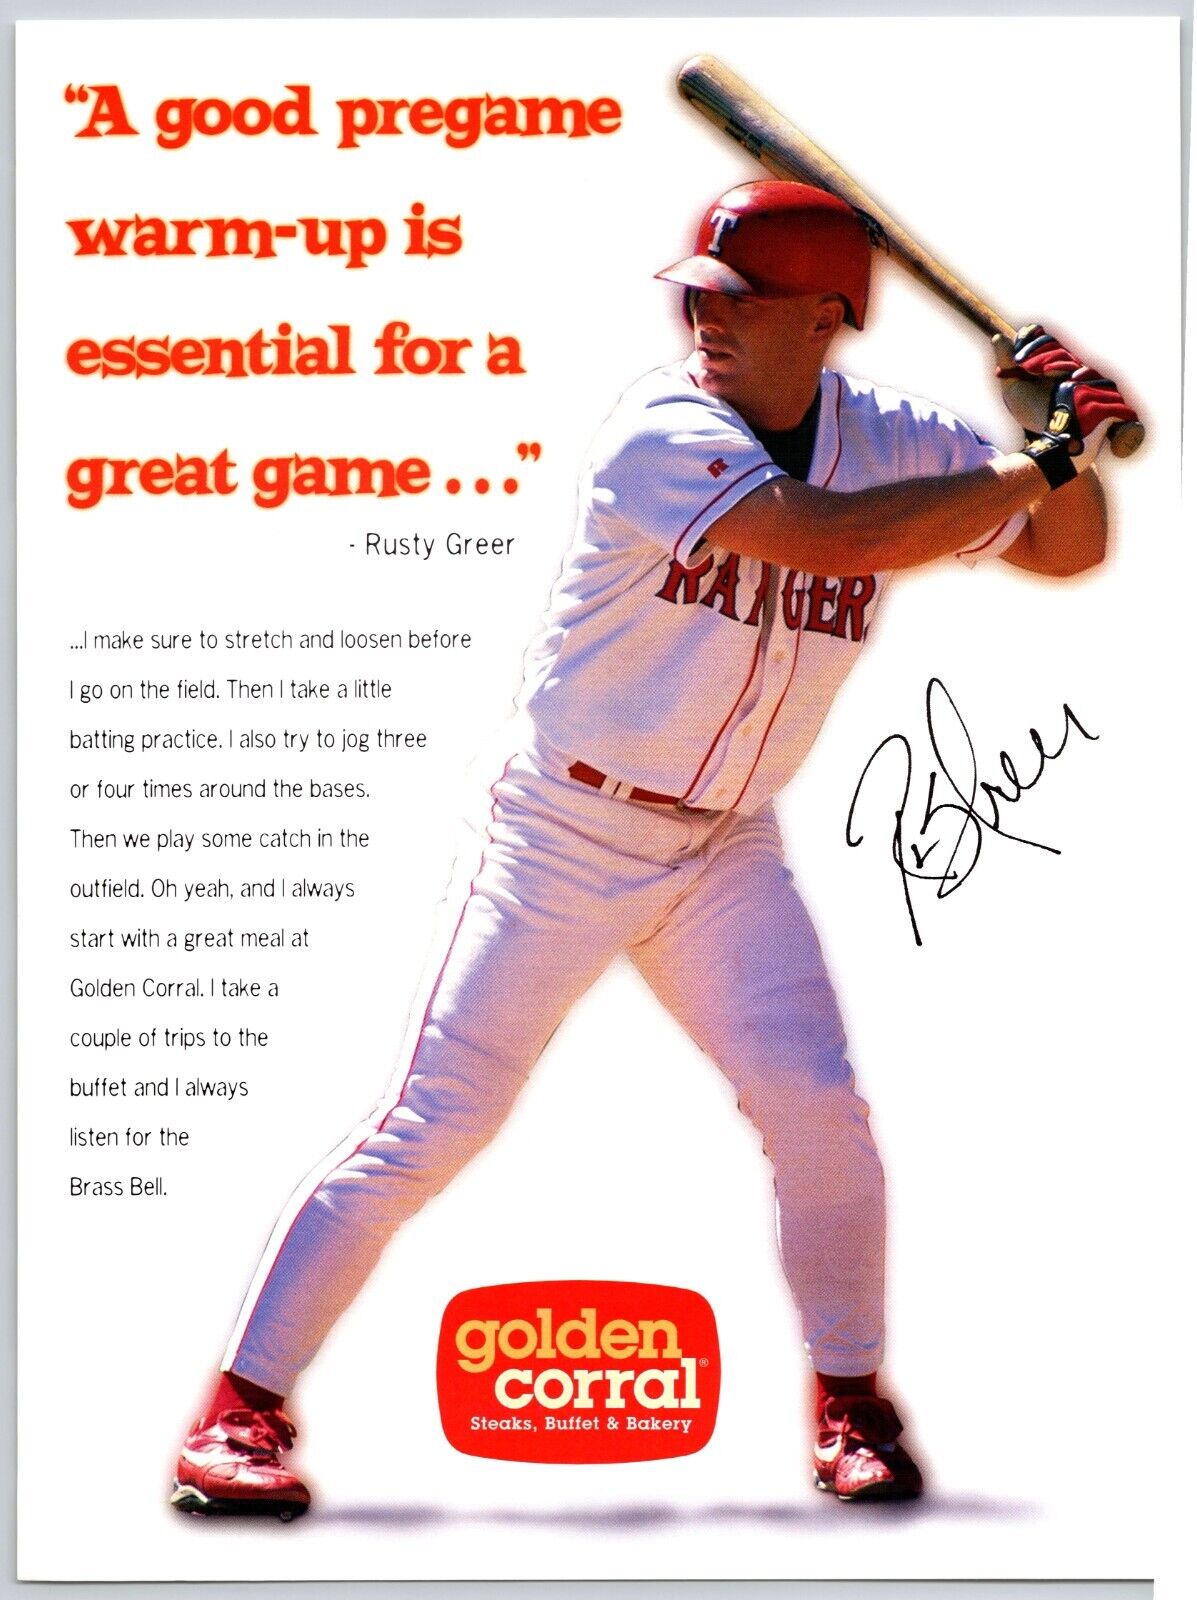 Texas Rangers Baseball Rusty Greer Golden Corral Advertisement 1998 8x10 Print